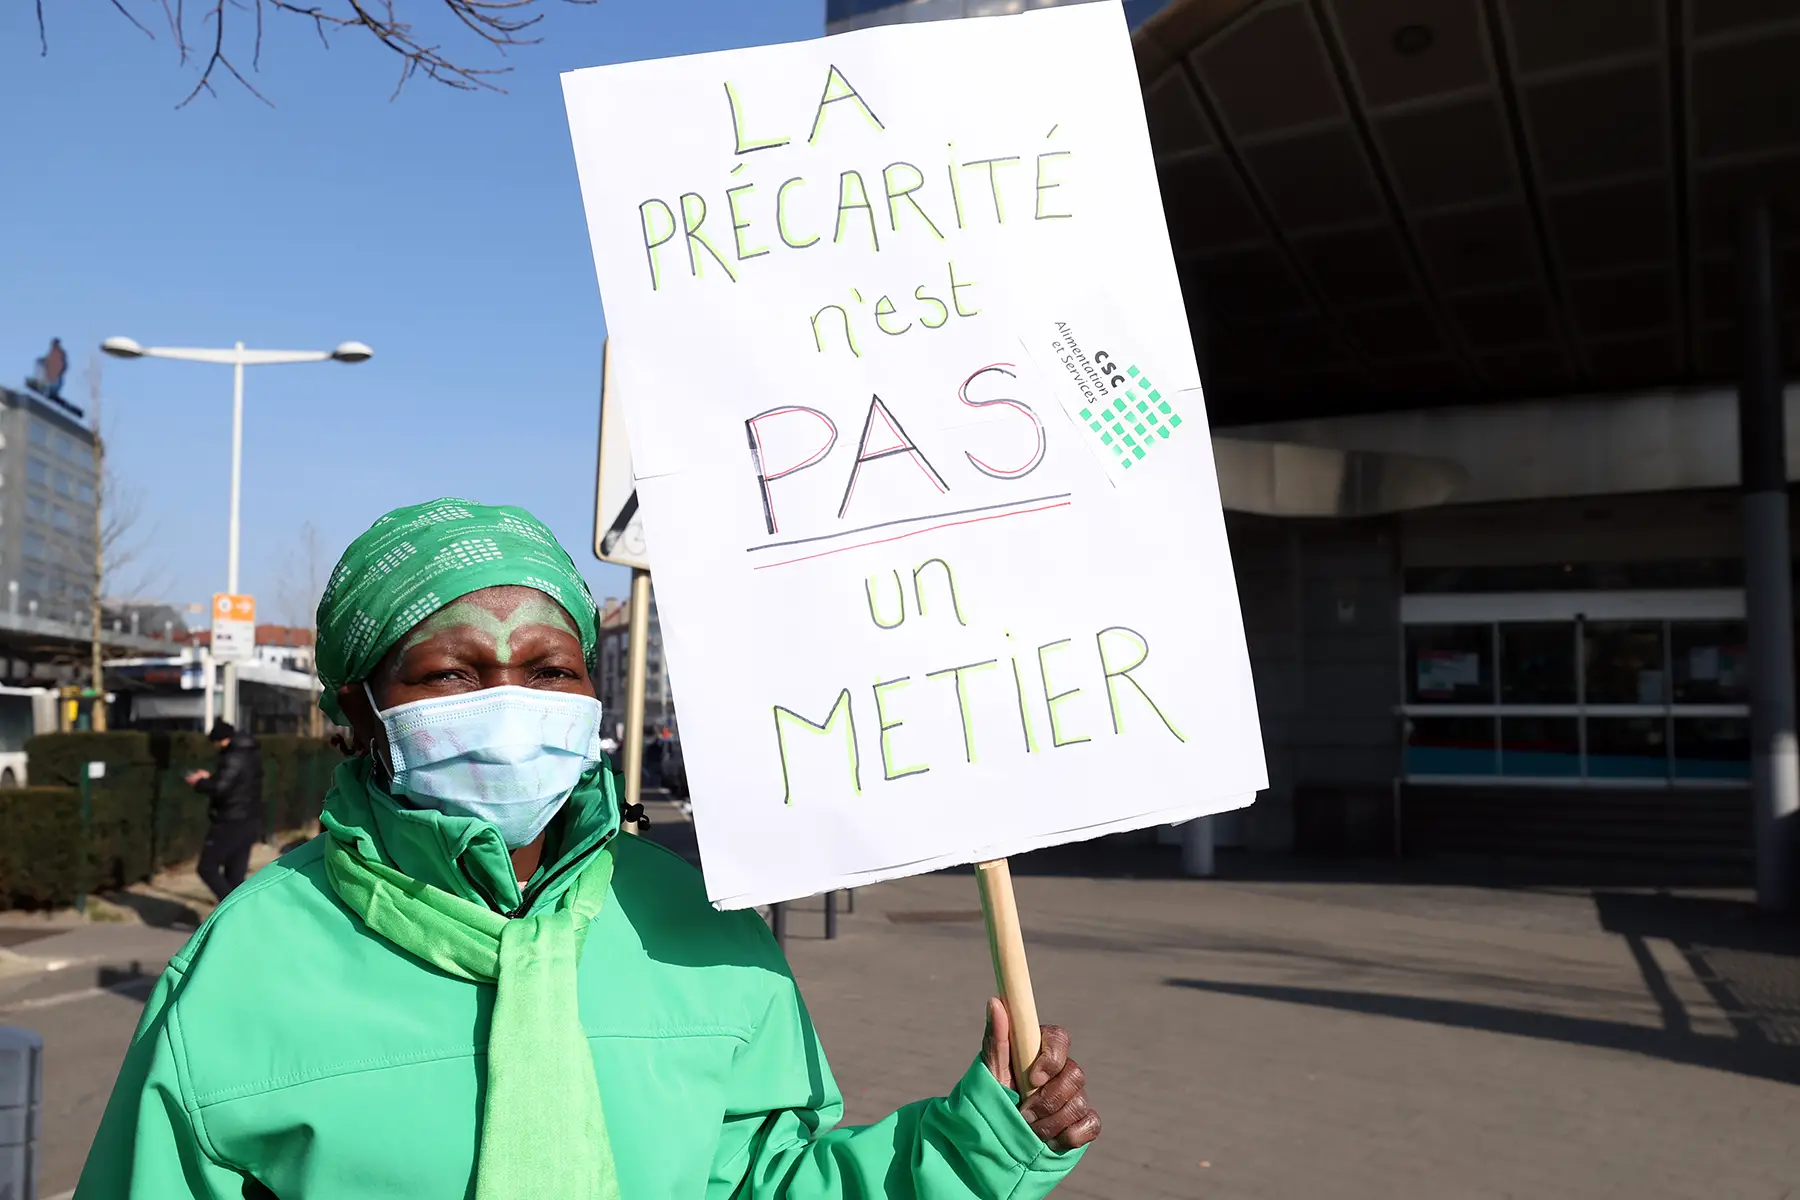 A woman in a green jacket and surgical mask protesting with a sign that says 'La précarité n'est pas un métier' - 'precarity isn't a job'